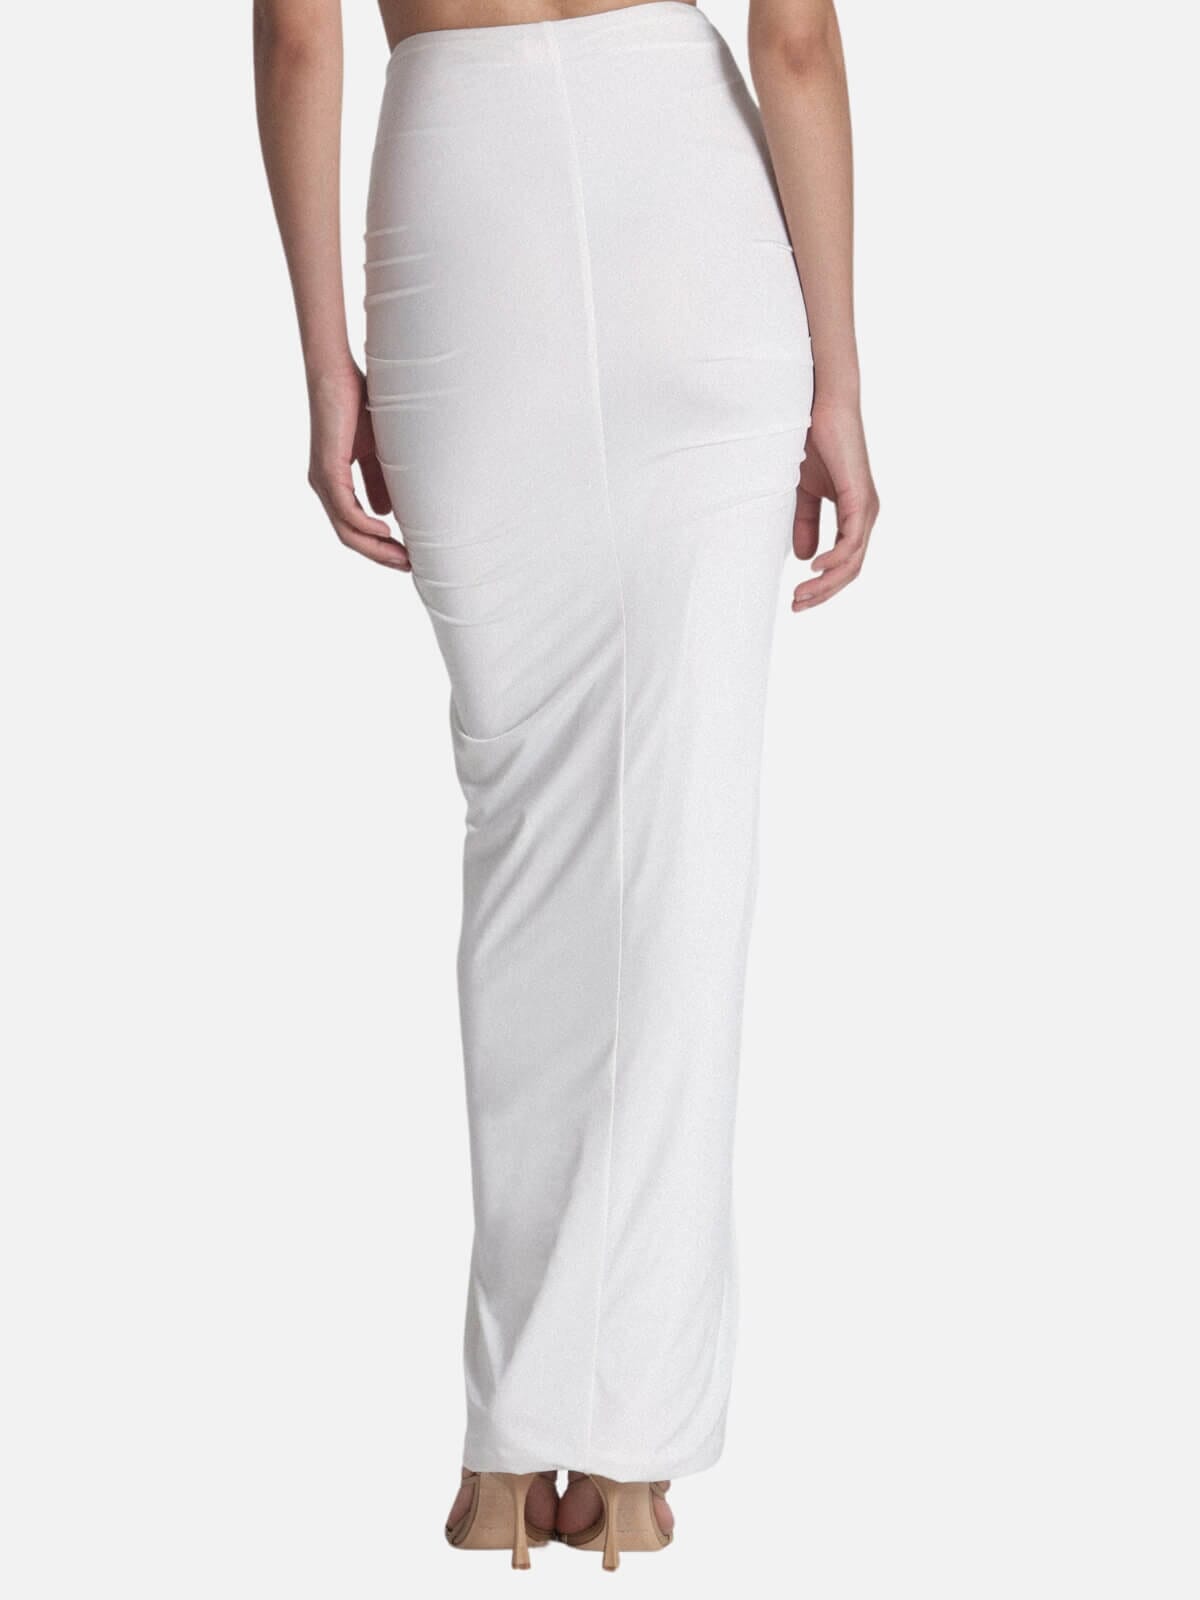 Bayse | Manhattan Maxi Skirt - White | Perlu